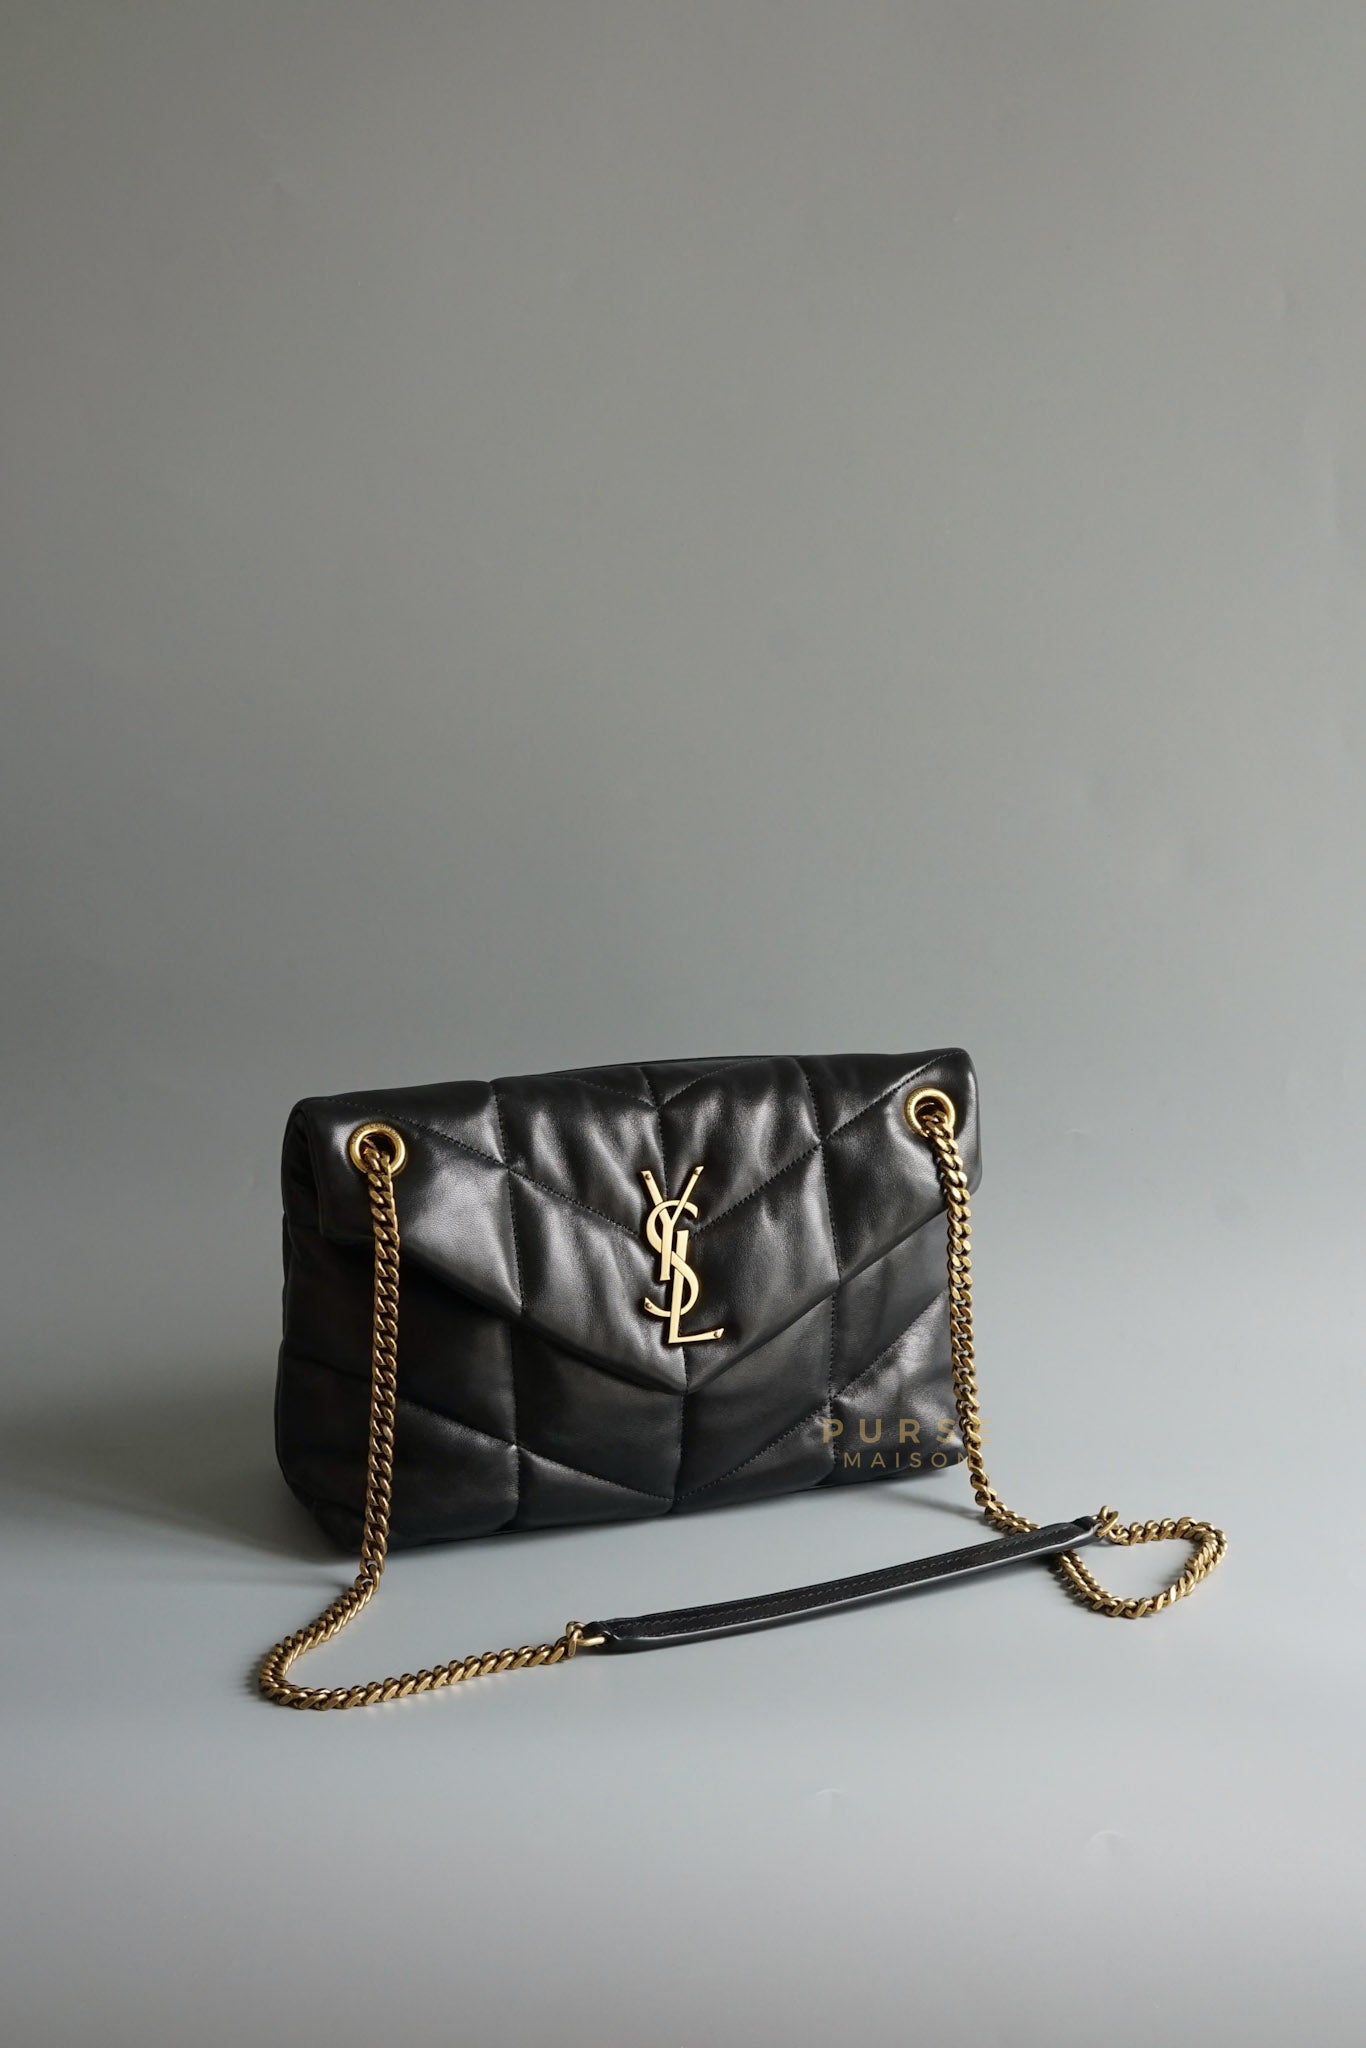 Puffer Small Black Lambskin in Gold Hardware | Purse Maison Luxury Bags Shop